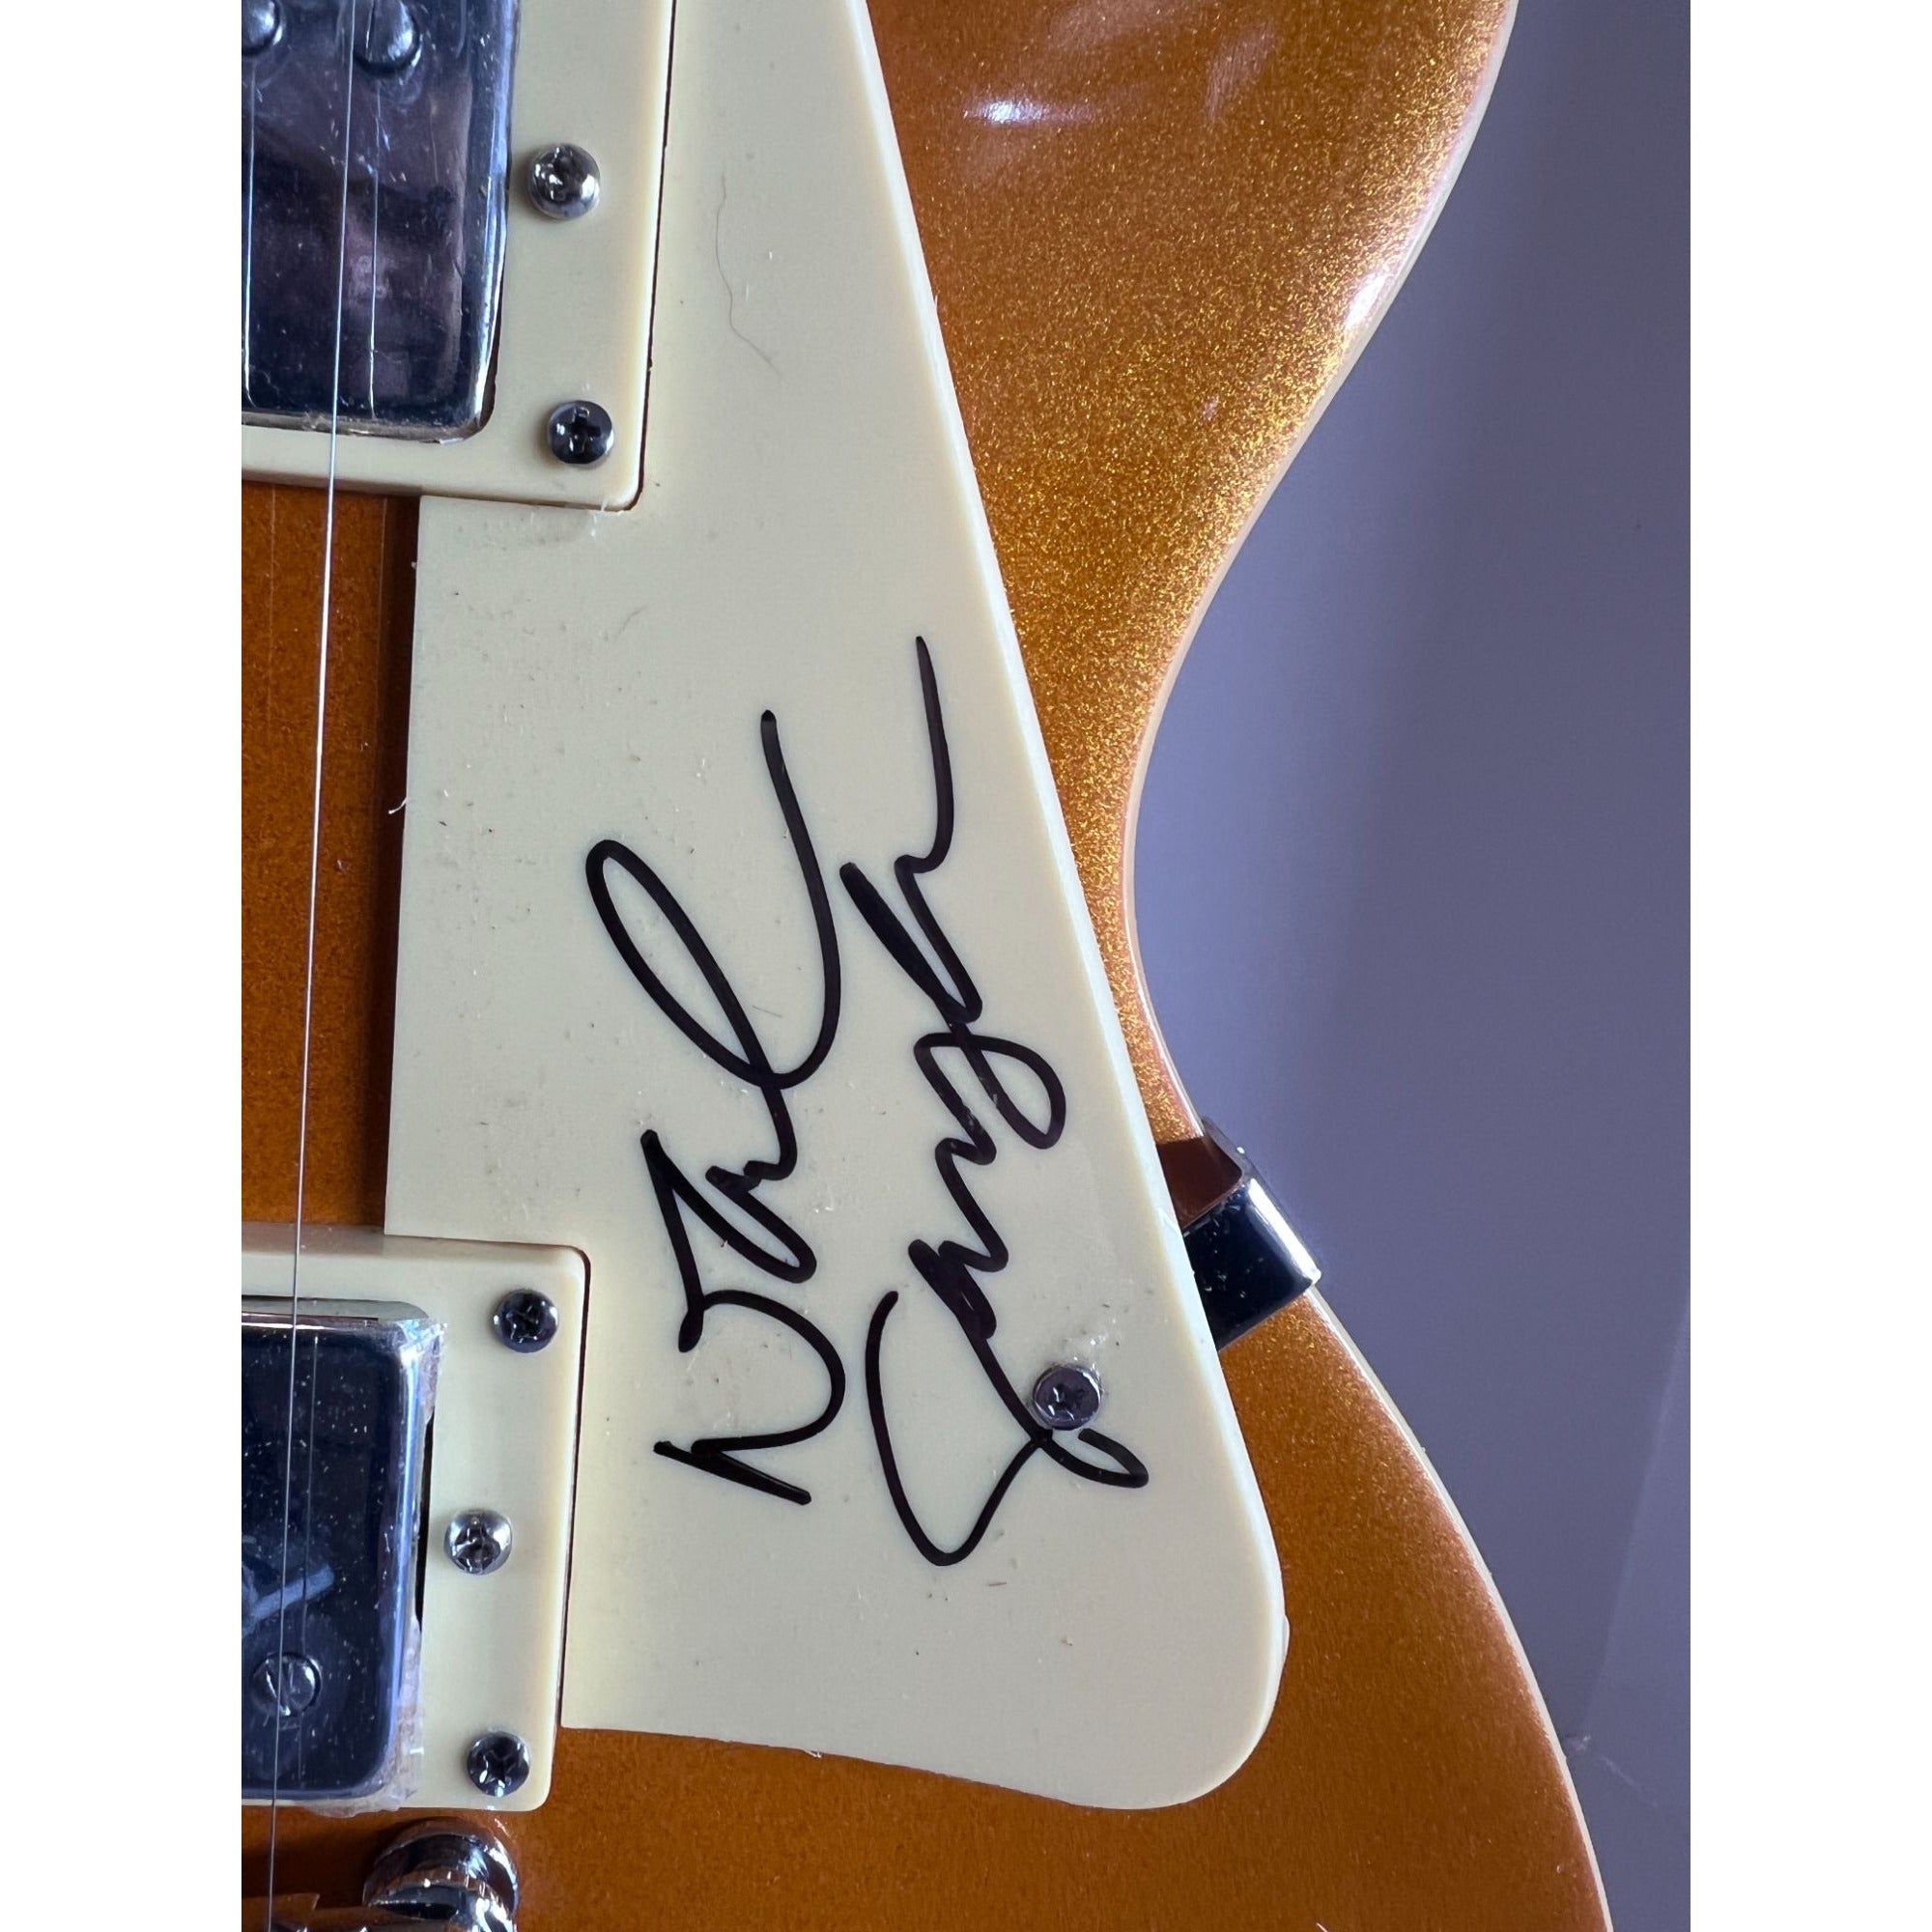 Def Leppard Joe Elliott Vivian Campbell Rick Savage Rick Allen Phil Collen les paul electric guitar signed with proof